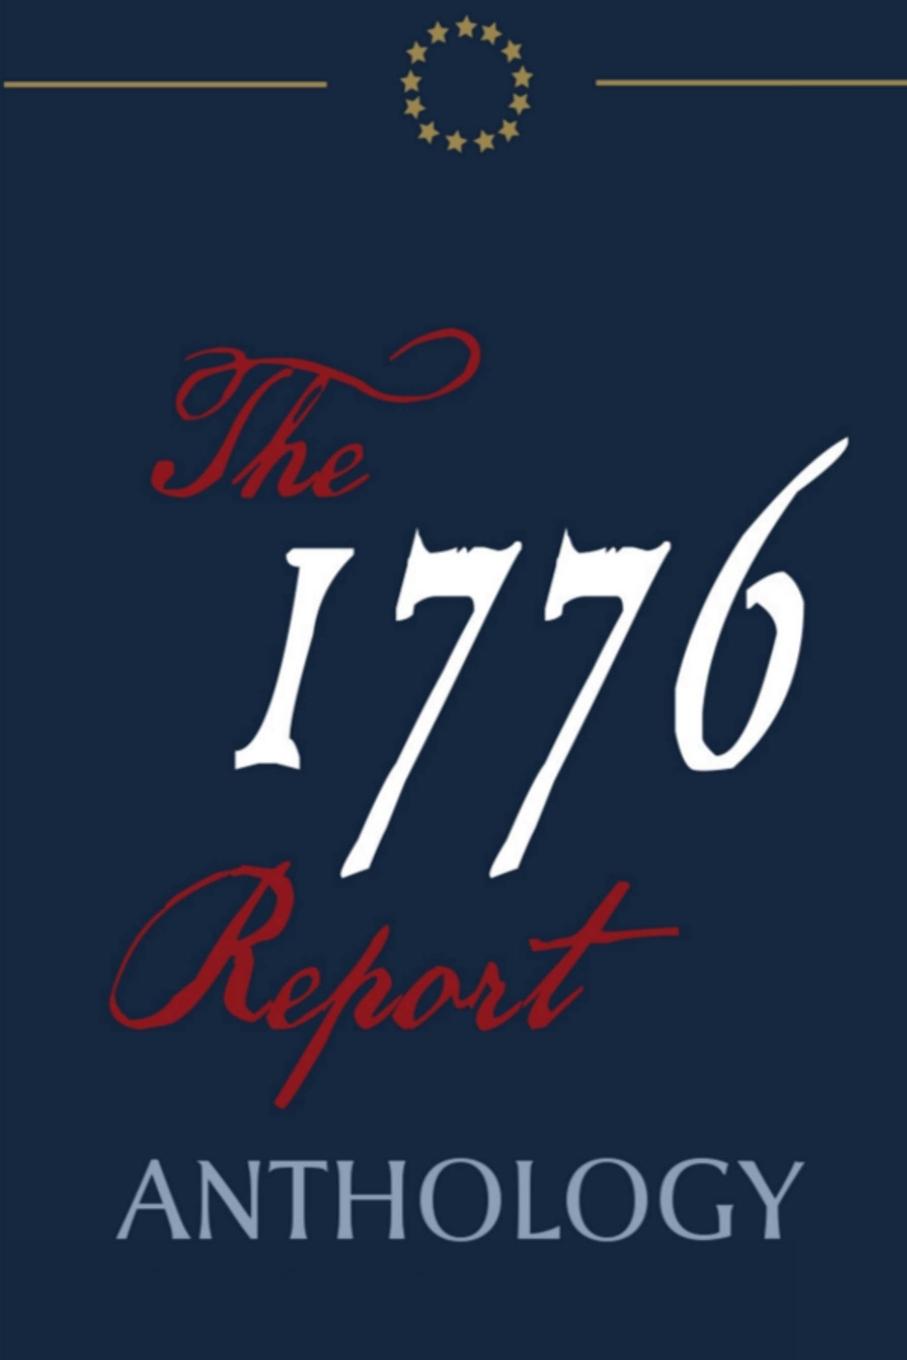 Kniha 1776 Report Anthology 